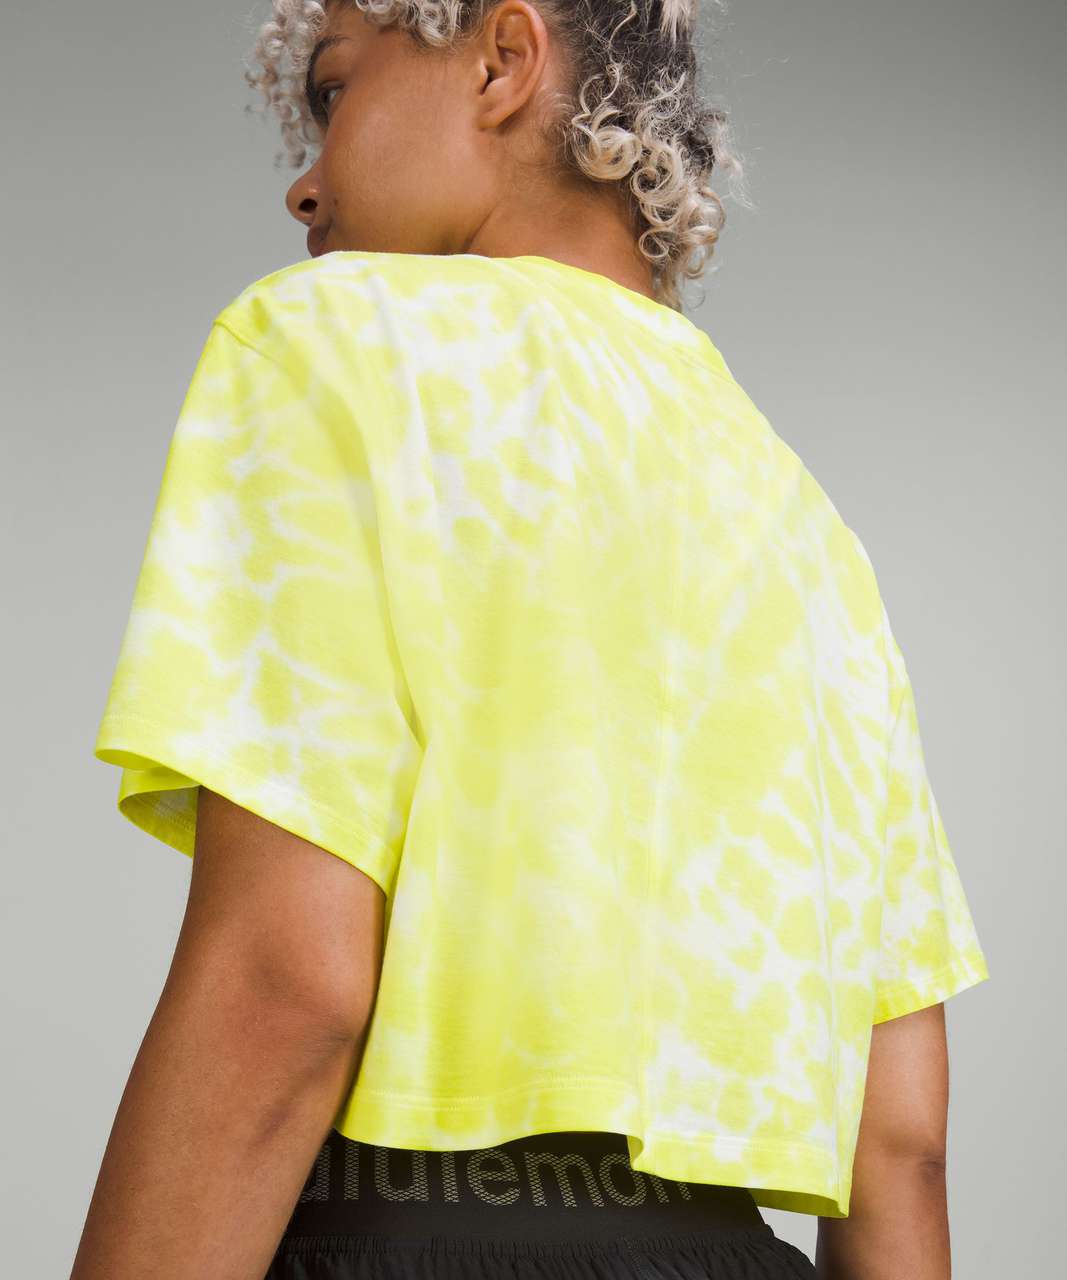 Lululemon All Yours Cropped Cotton T-Shirt *Tie Dye - Marmoleado Tie Dye Highlight Yellow